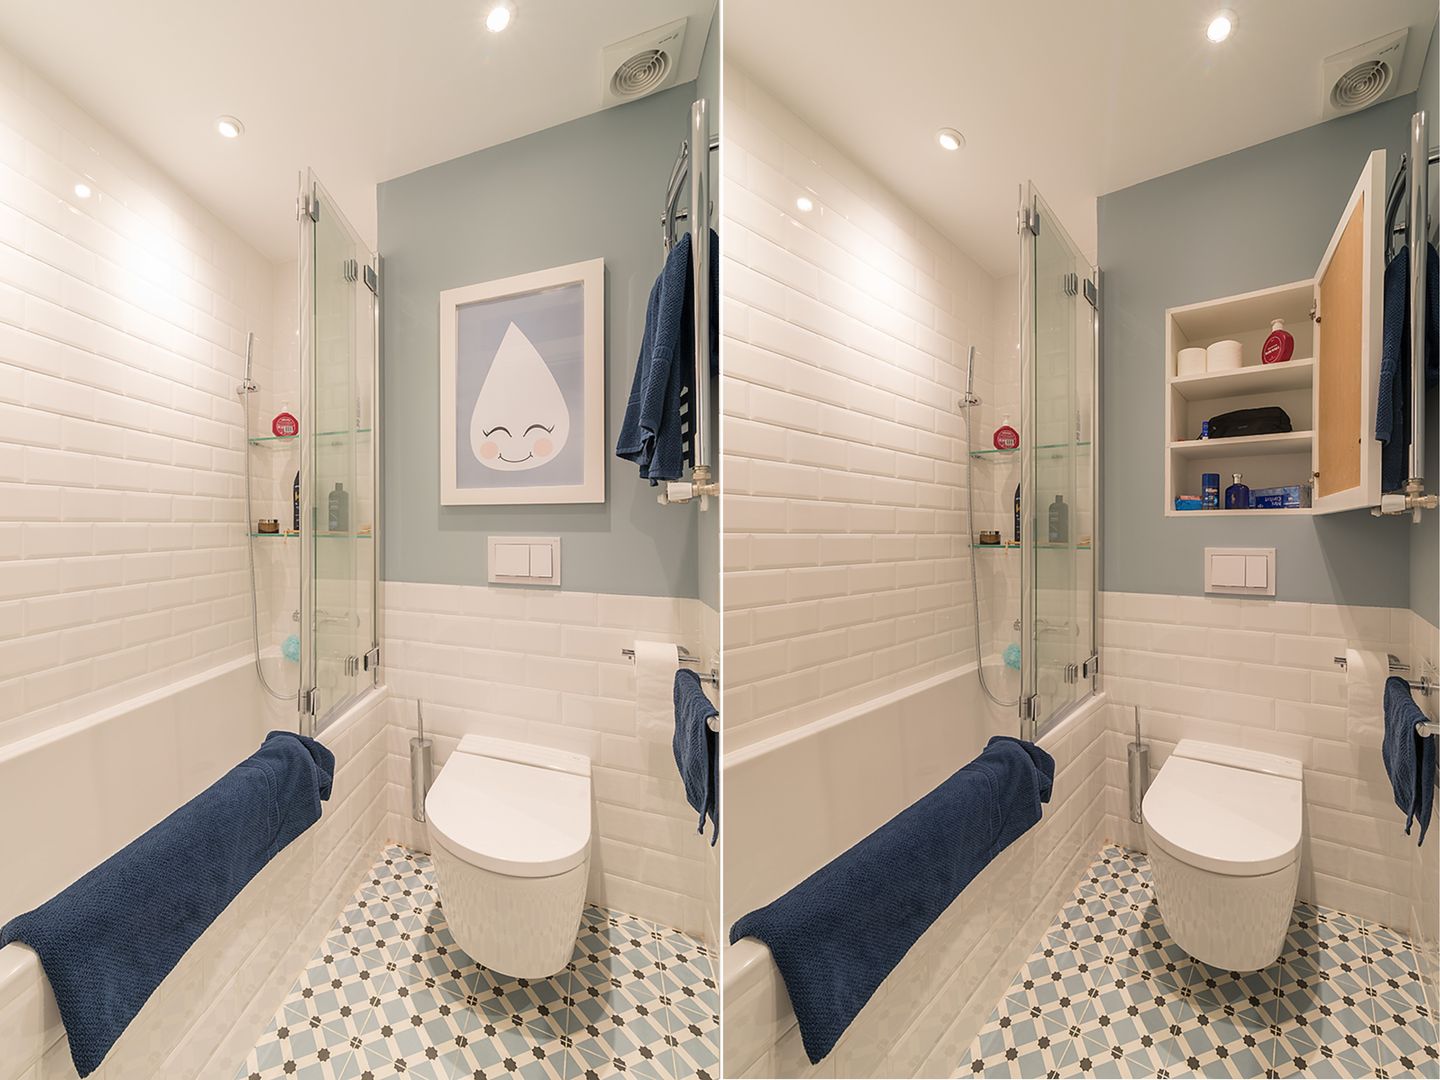 homify Baños de estilo clásico baño infantil,cuarto de baño,radiador toallero,griferia de baño,mampara bañera,azul,blanco,baldosa,azulejo,baldosa hidraulica